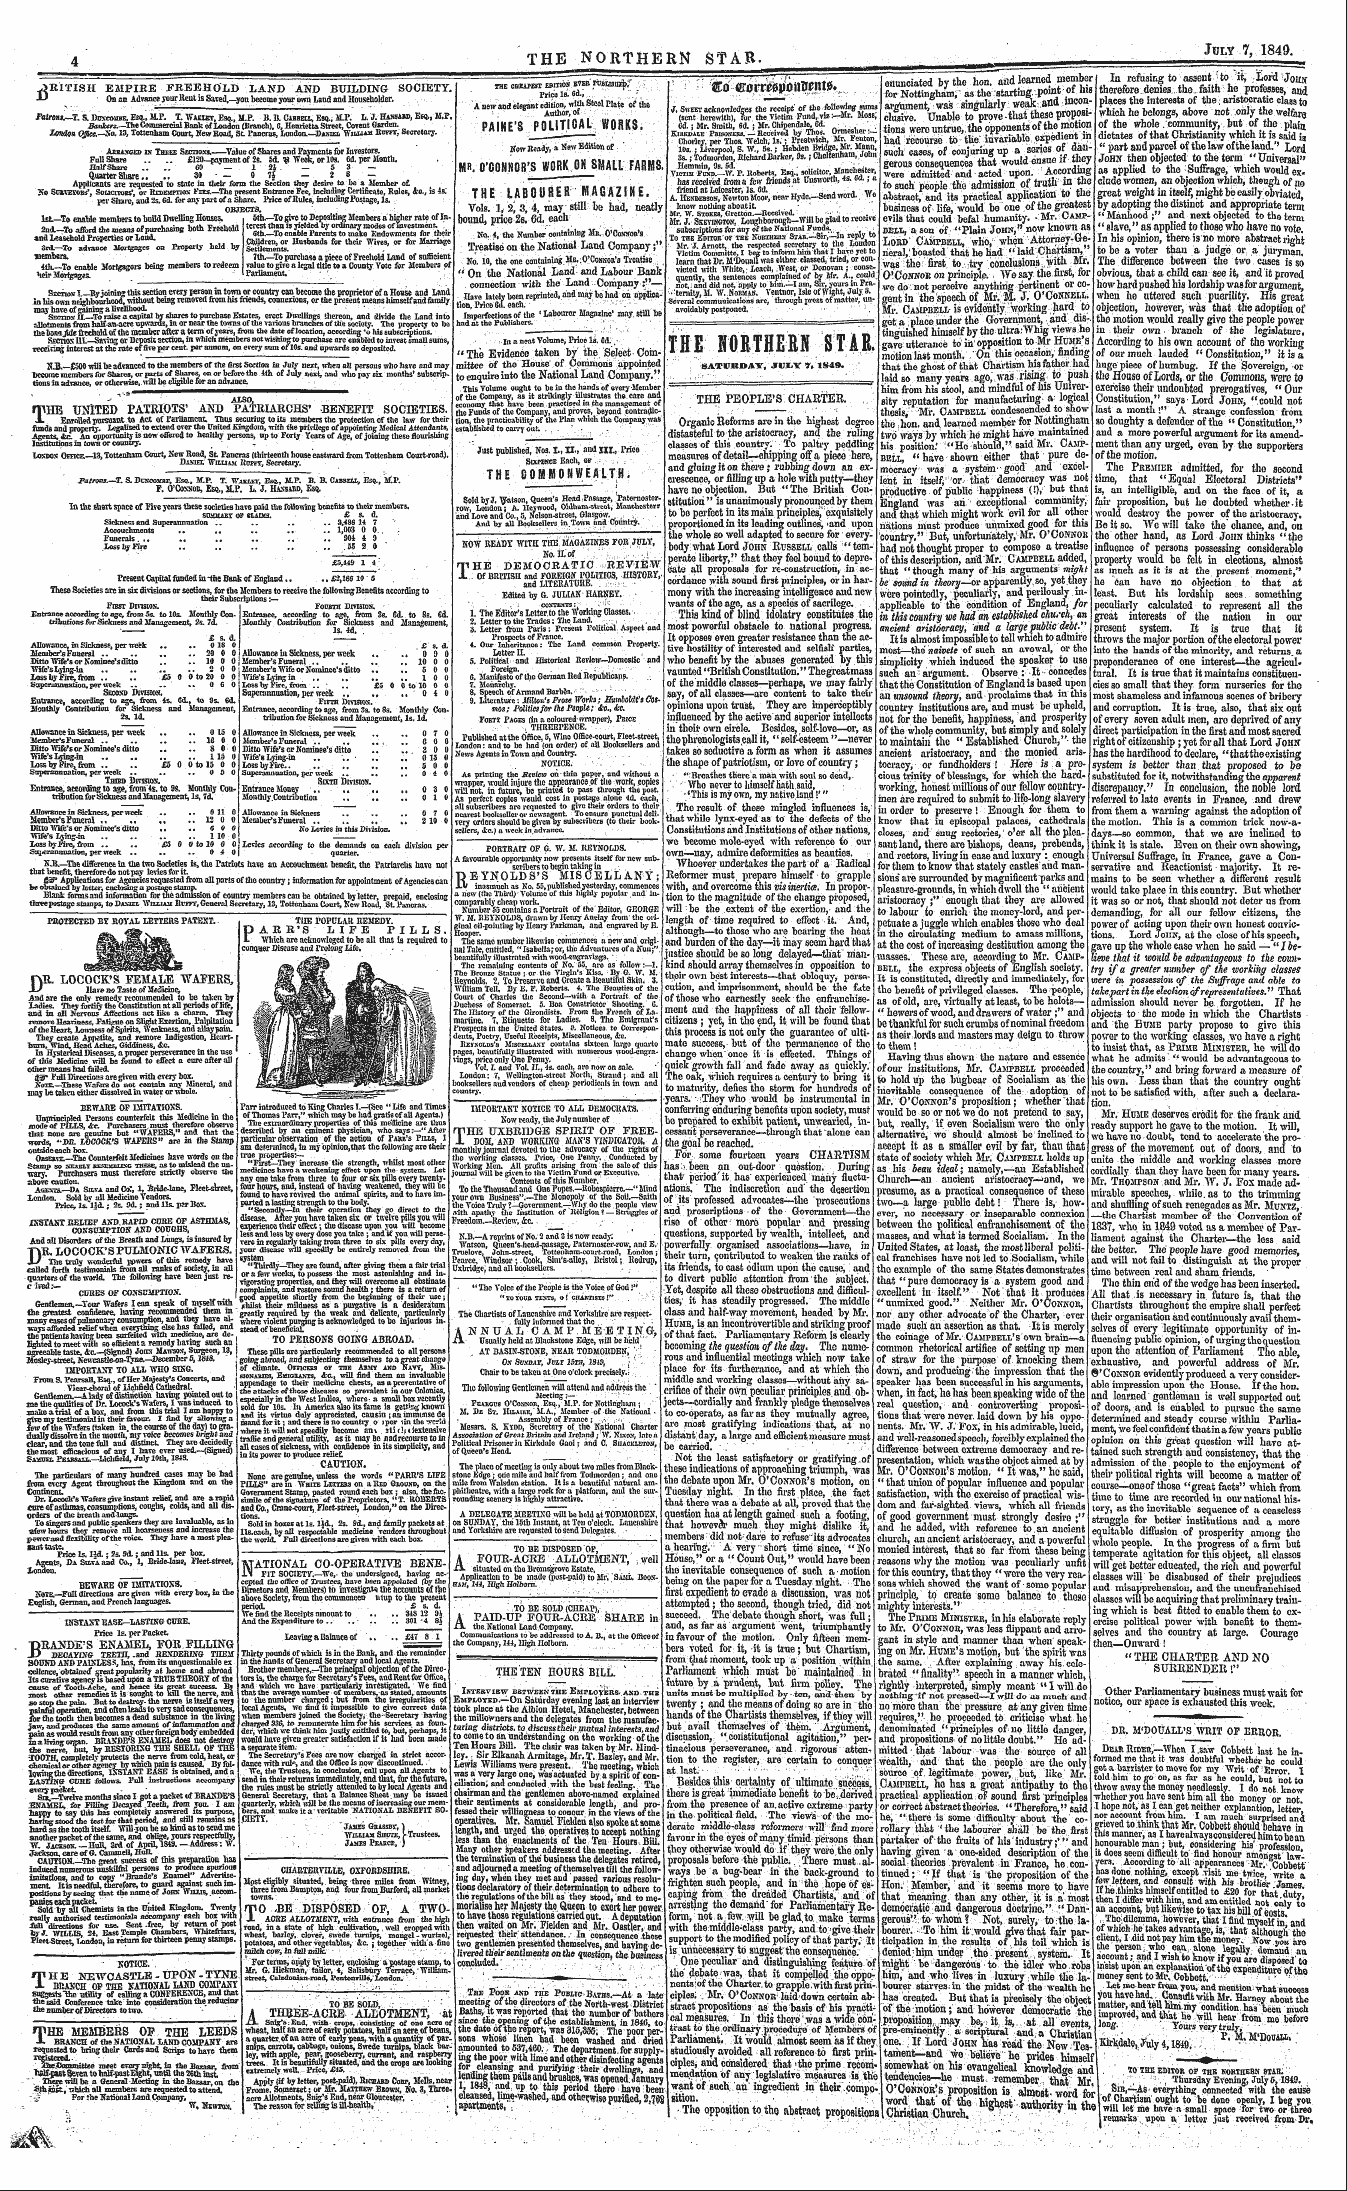 Northern Star (1837-1852): jS F Y, 3rd edition - Ad00420